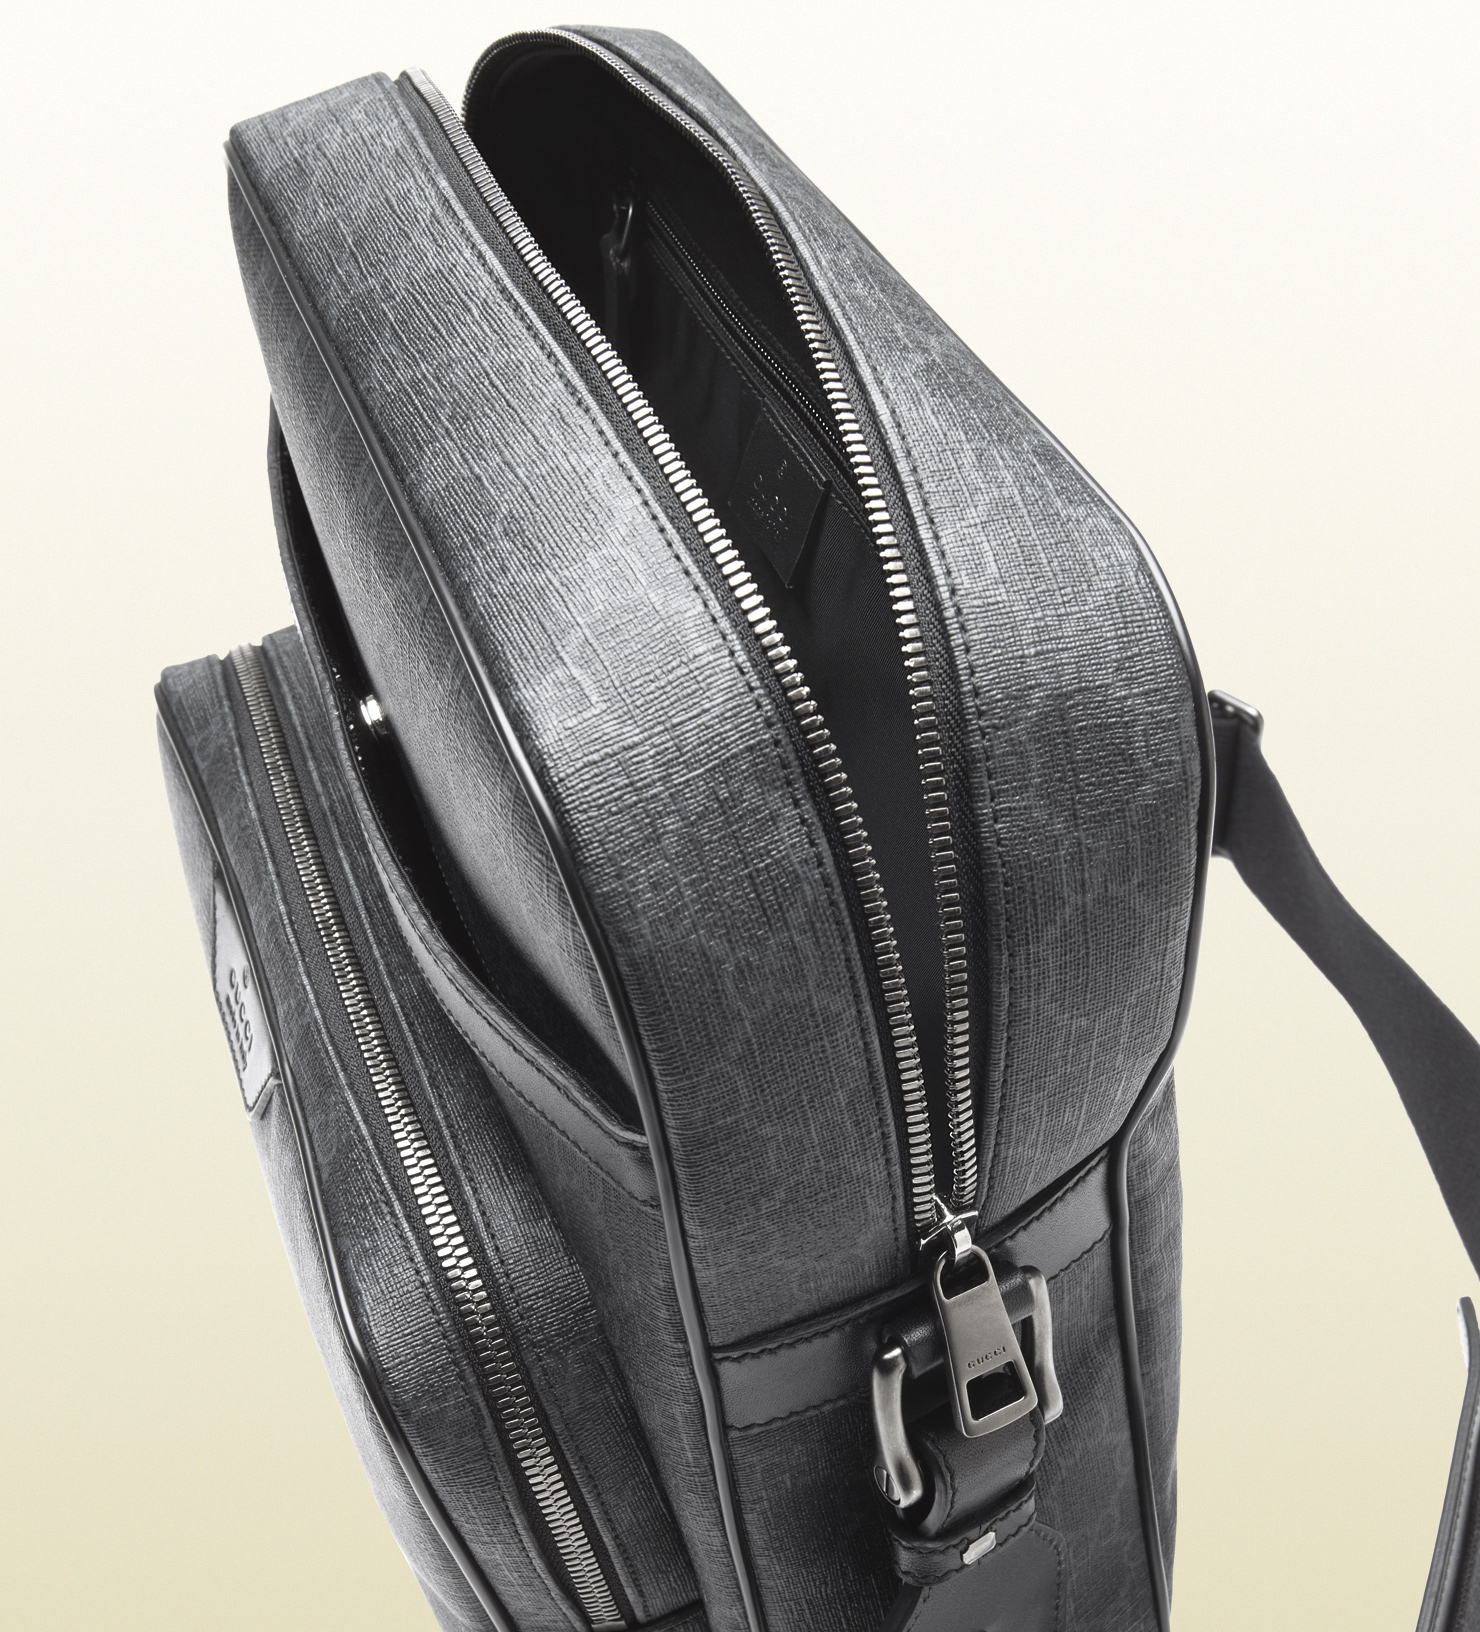 Gucci Gg Supreme Canvas Flight Bag in Grey (Black) for Men - Lyst